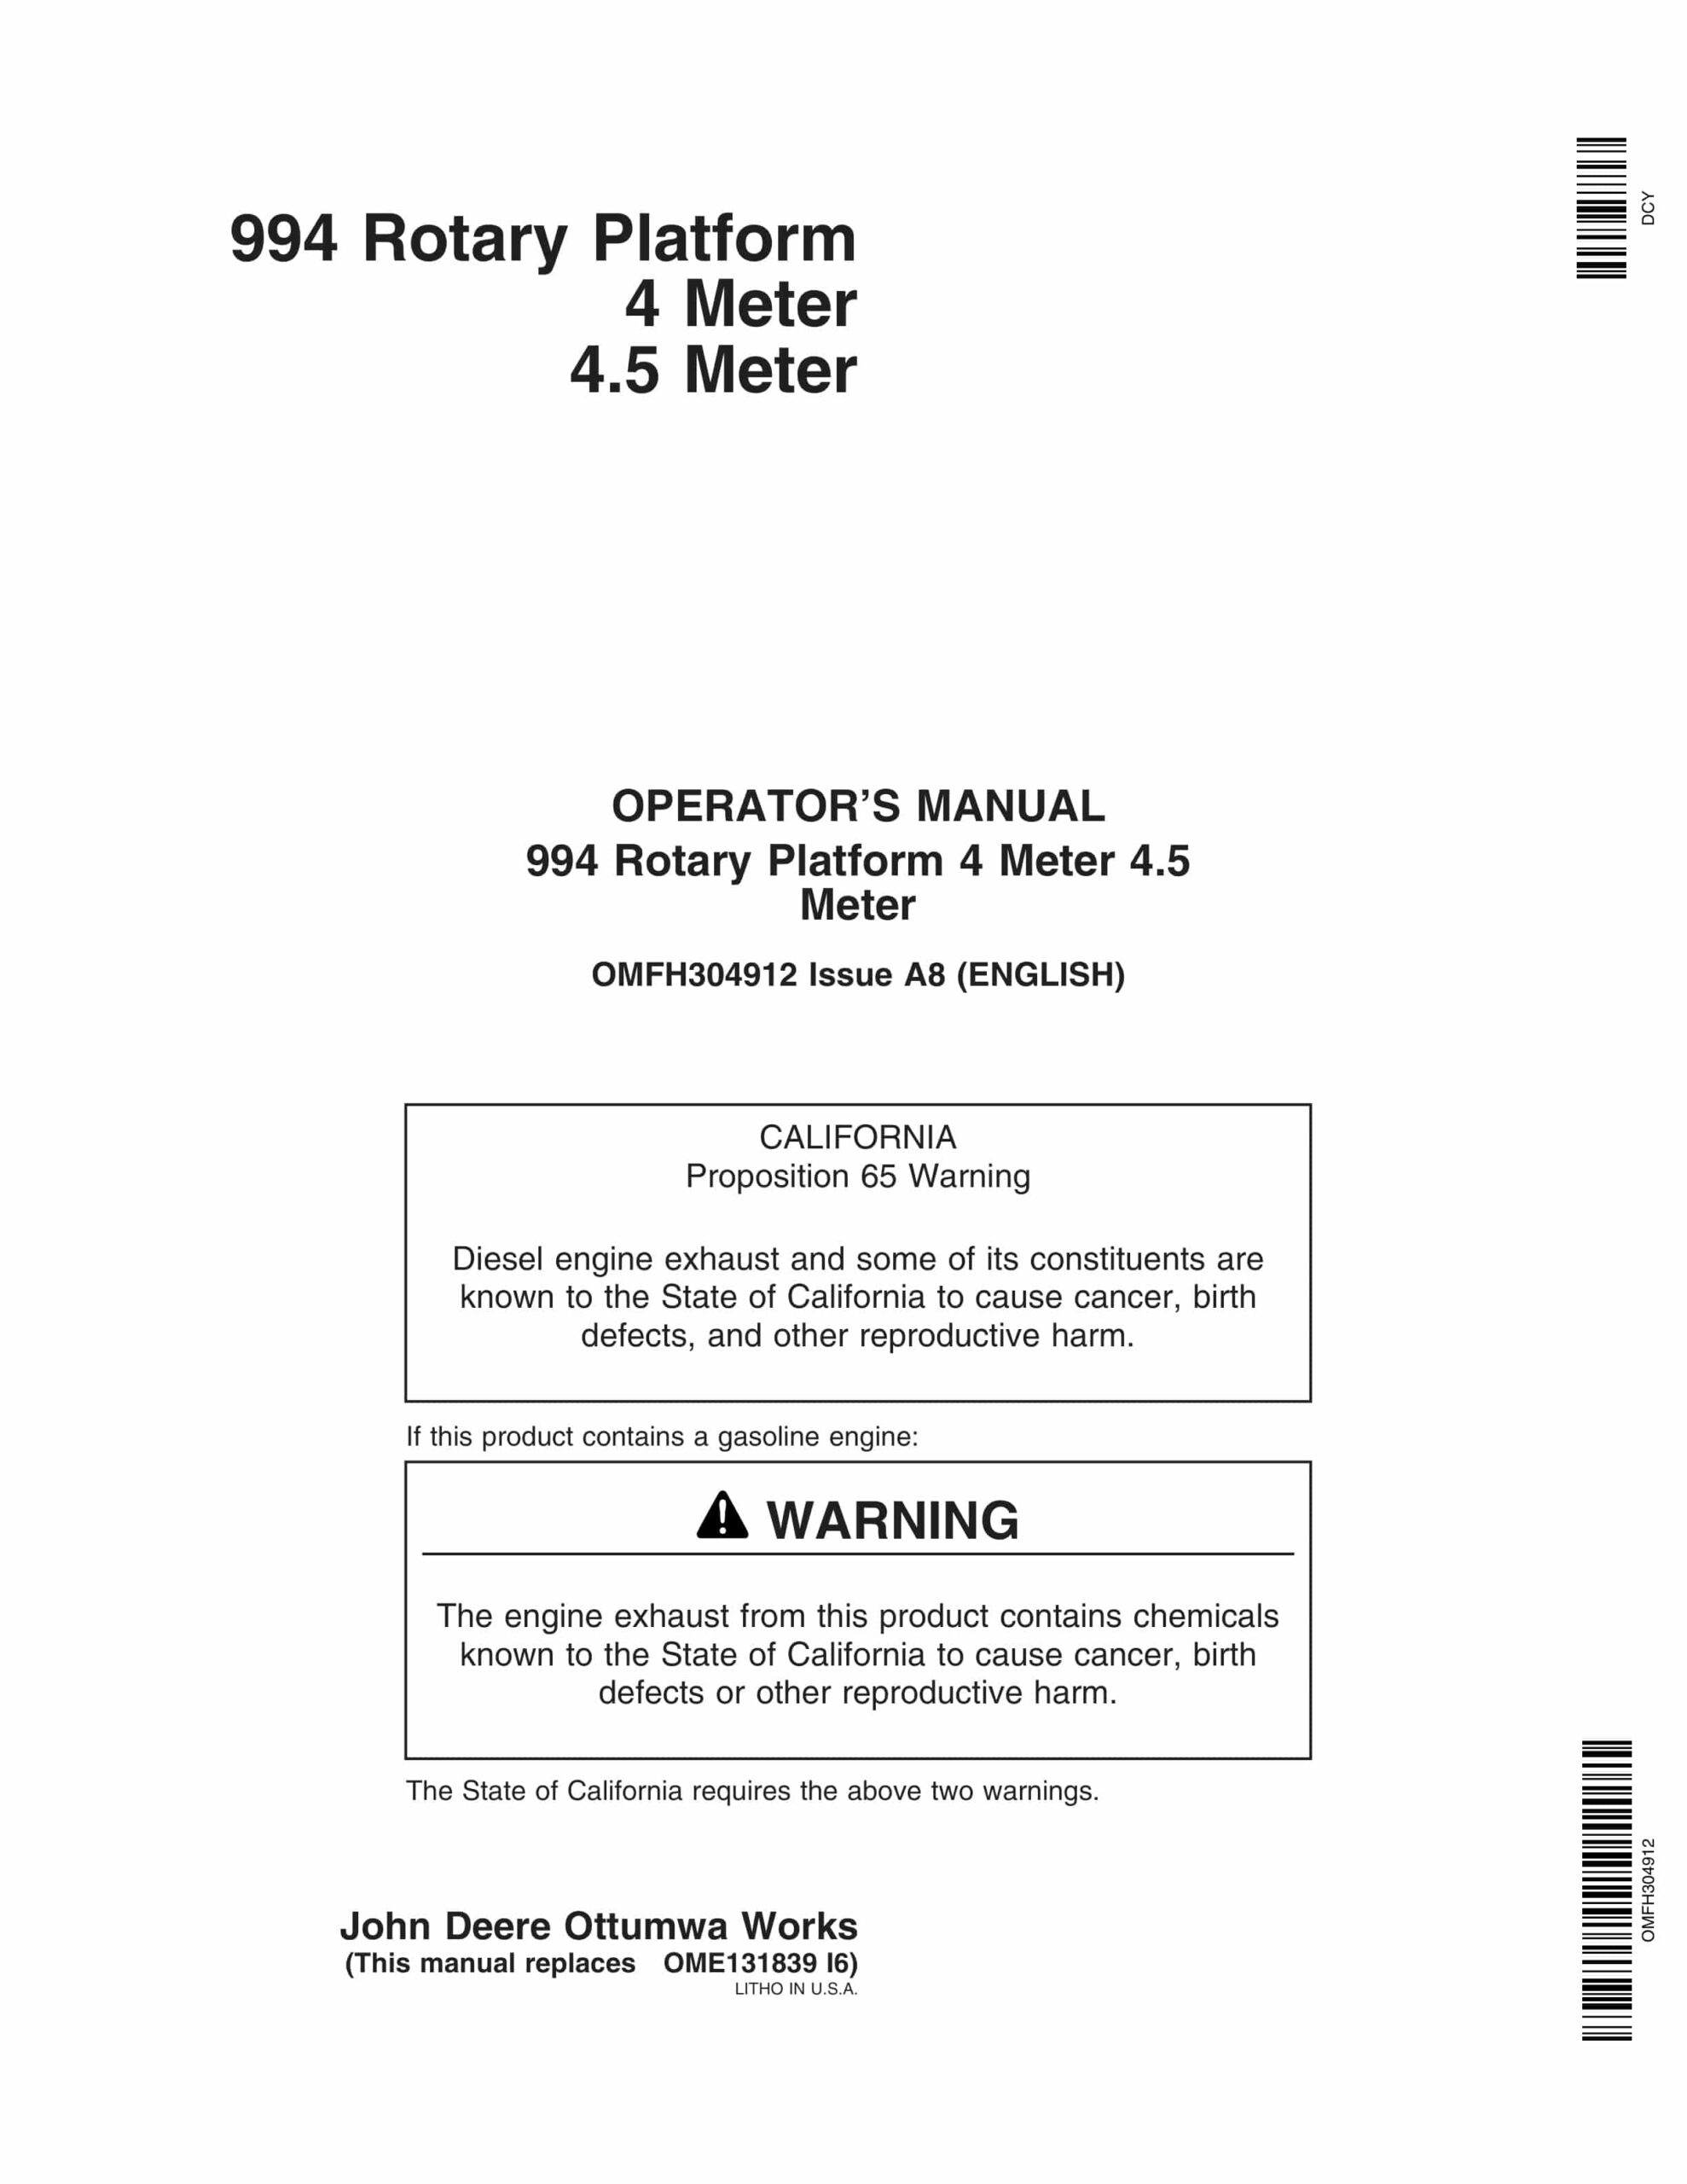 John Deere 4 Meter 4.5 Meter 994 Rotary Platform Operator Manual OMFH304912-1